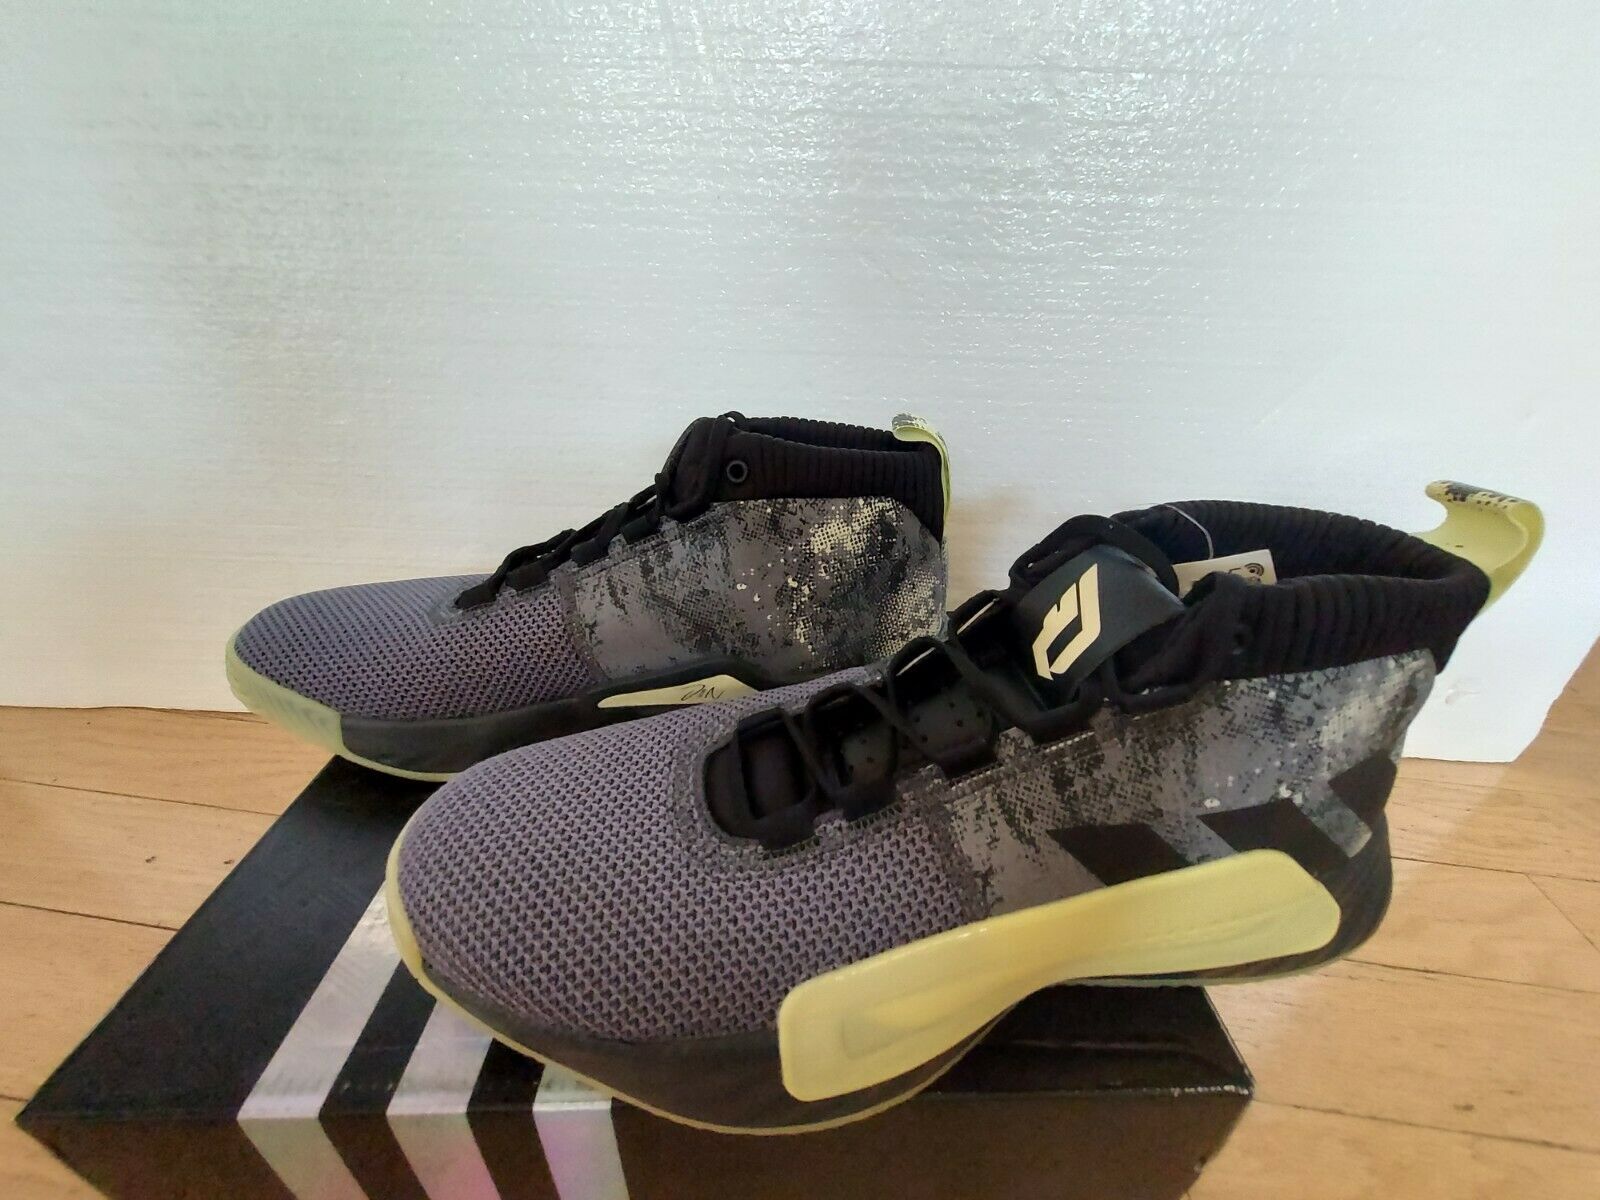 NeW Adidas Dame 5 Lillard Size 12.5 Black Grey Yellow Shoes F36933 Damian Blazer